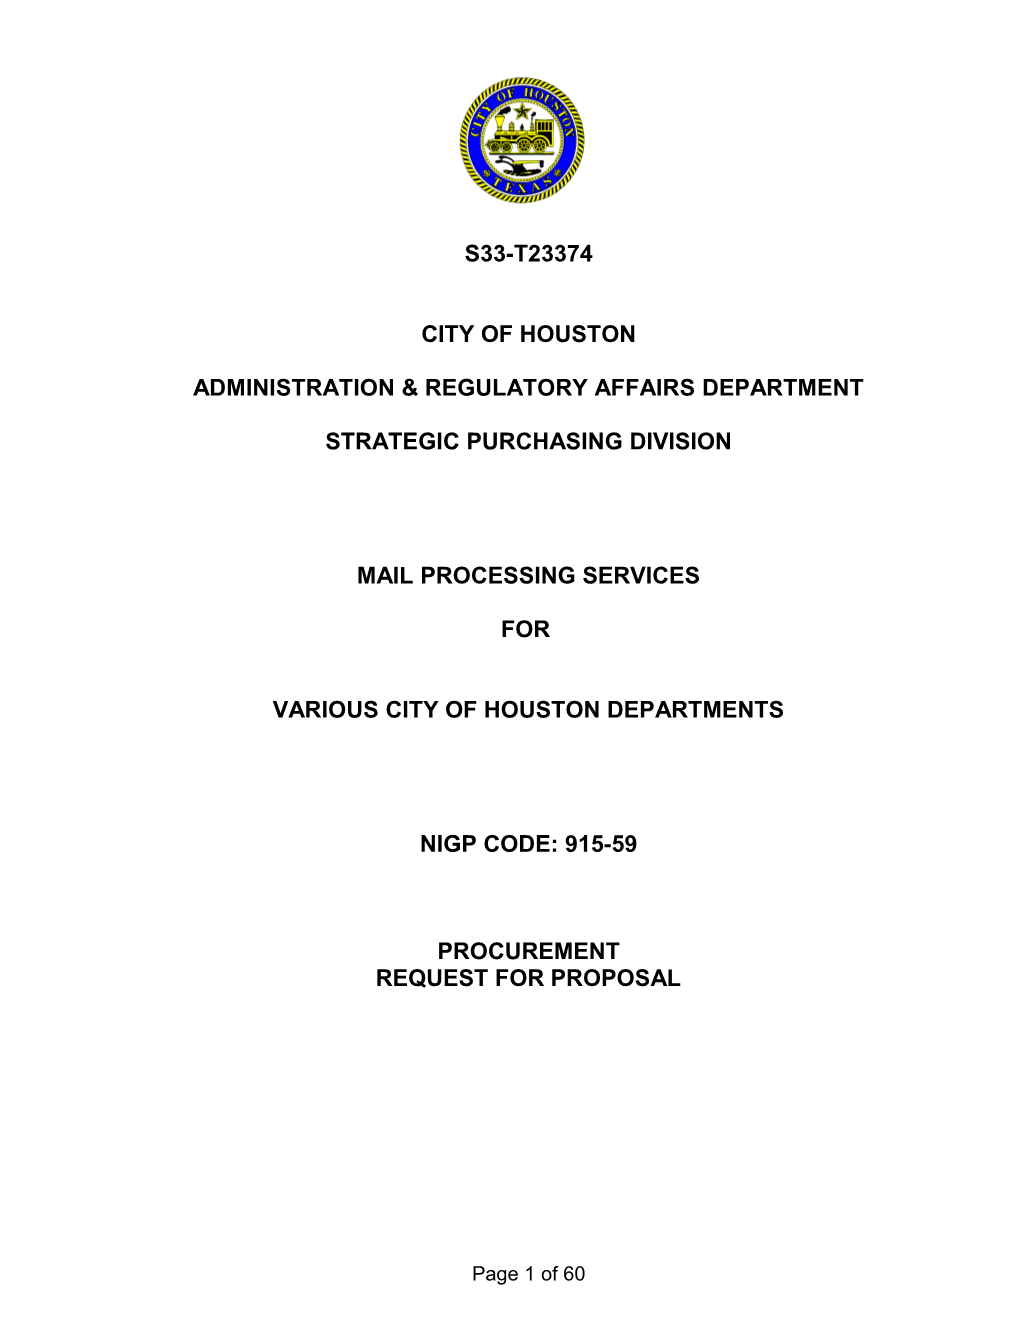 Administration & Regulatory Affairs Department